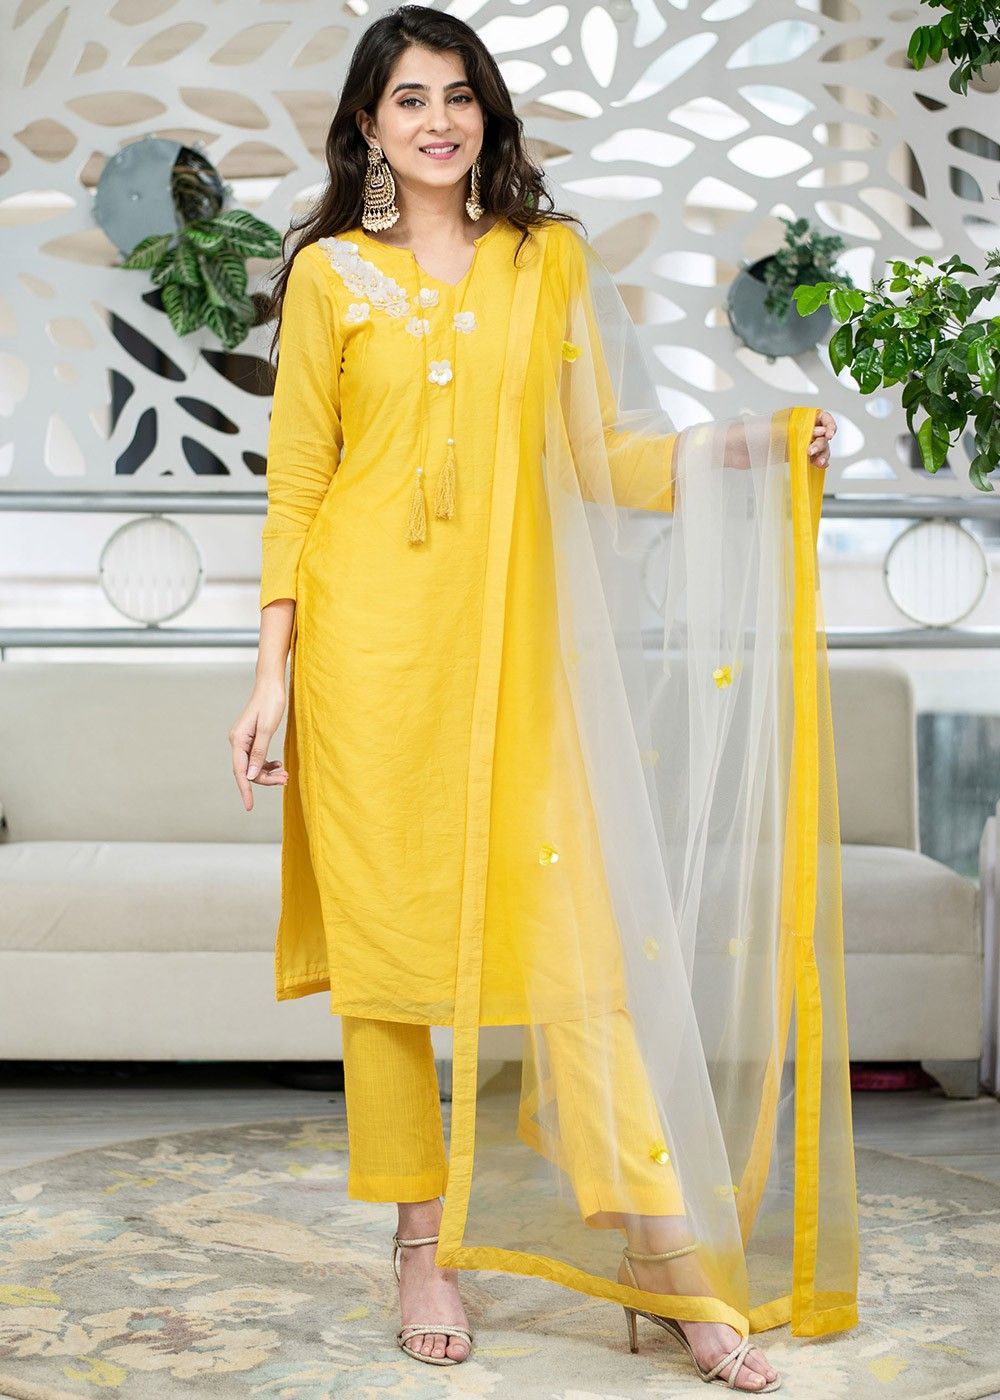 15 Stunning Designs of Yellow Salwar kameez For Any Occasion | Patiala suit,  Patiala salwar, Indian fashion